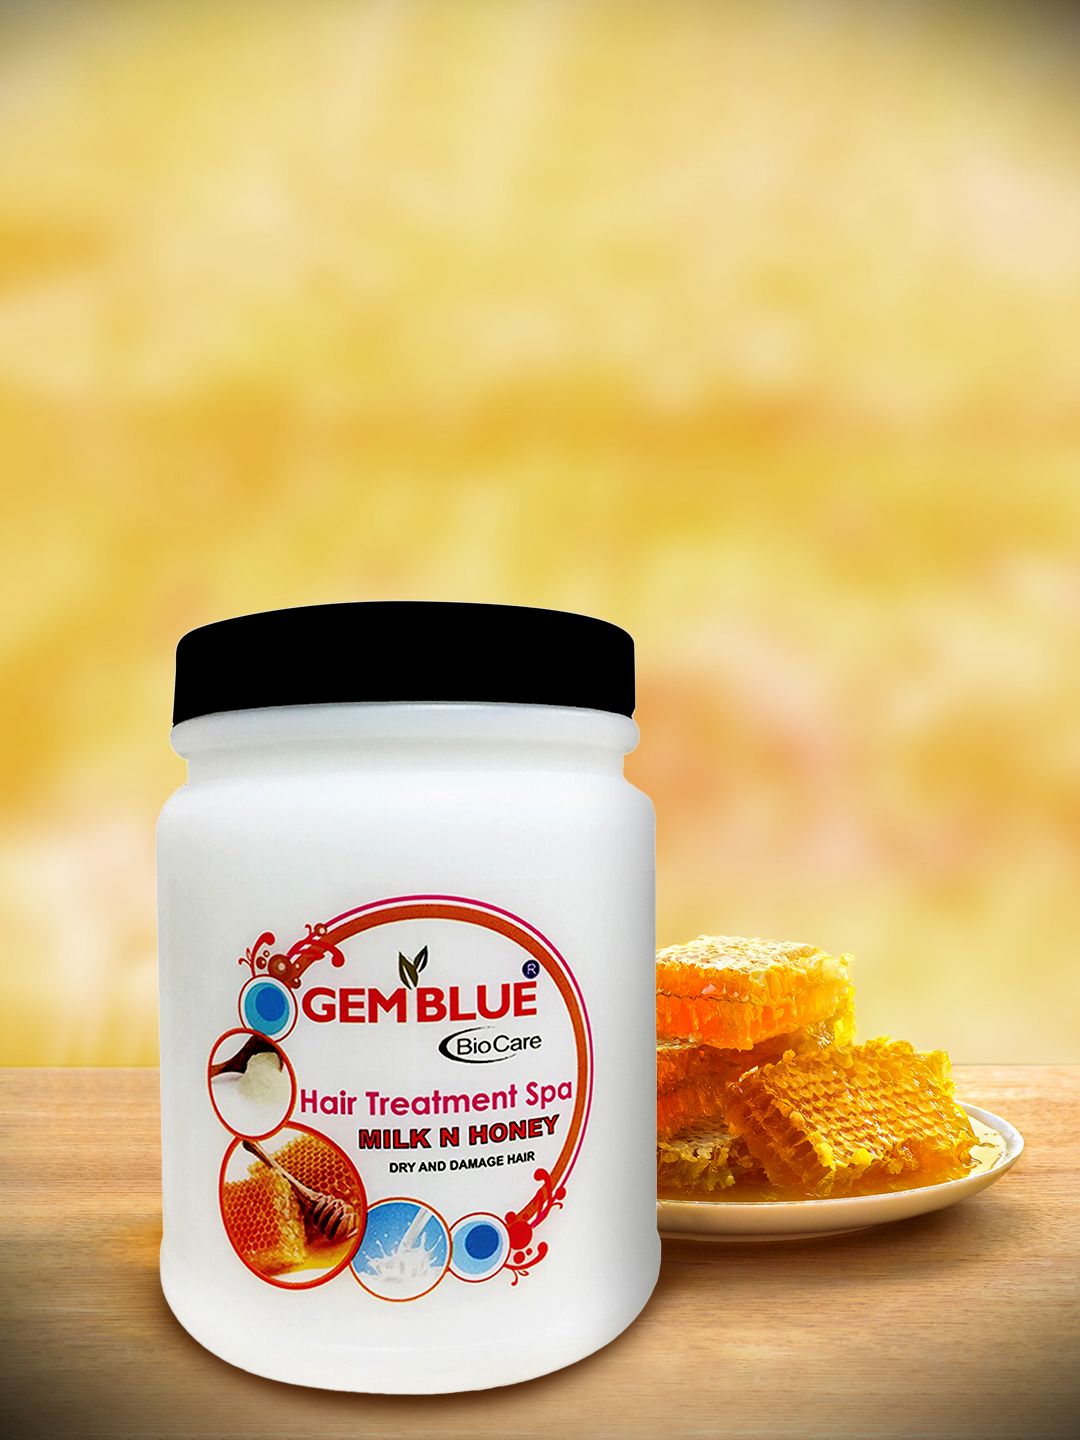 GEMBLUE BioCare Milk & Honey Hair Treatment Spa - 1000 g Price in India